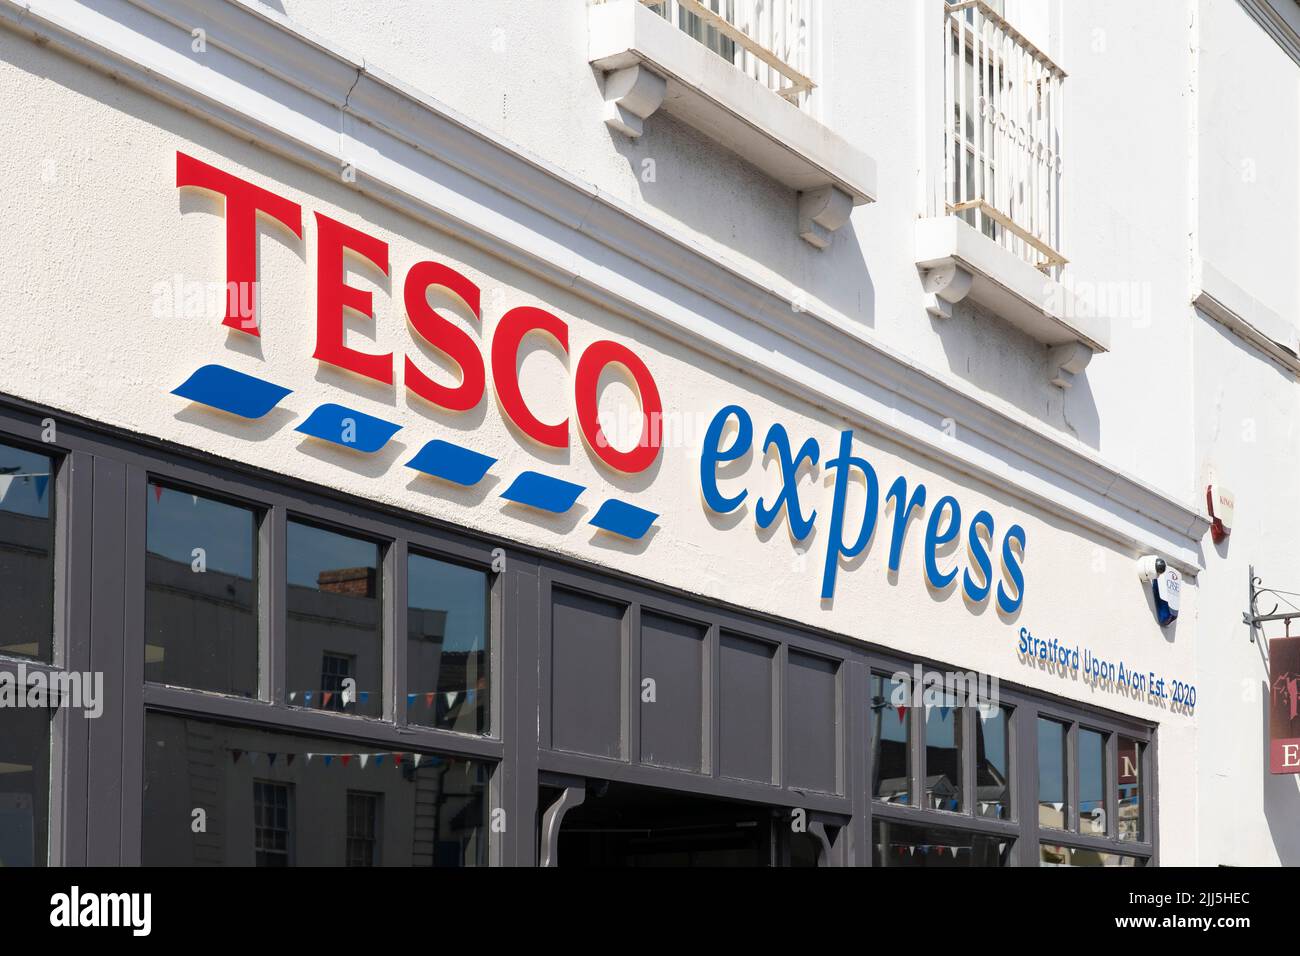 Logotipo y título de Tesco Express en un pequeño supermercado de Bridge Street en Stratford Upon Avon, Inglaterra. Concepto - costo de vida Foto de stock